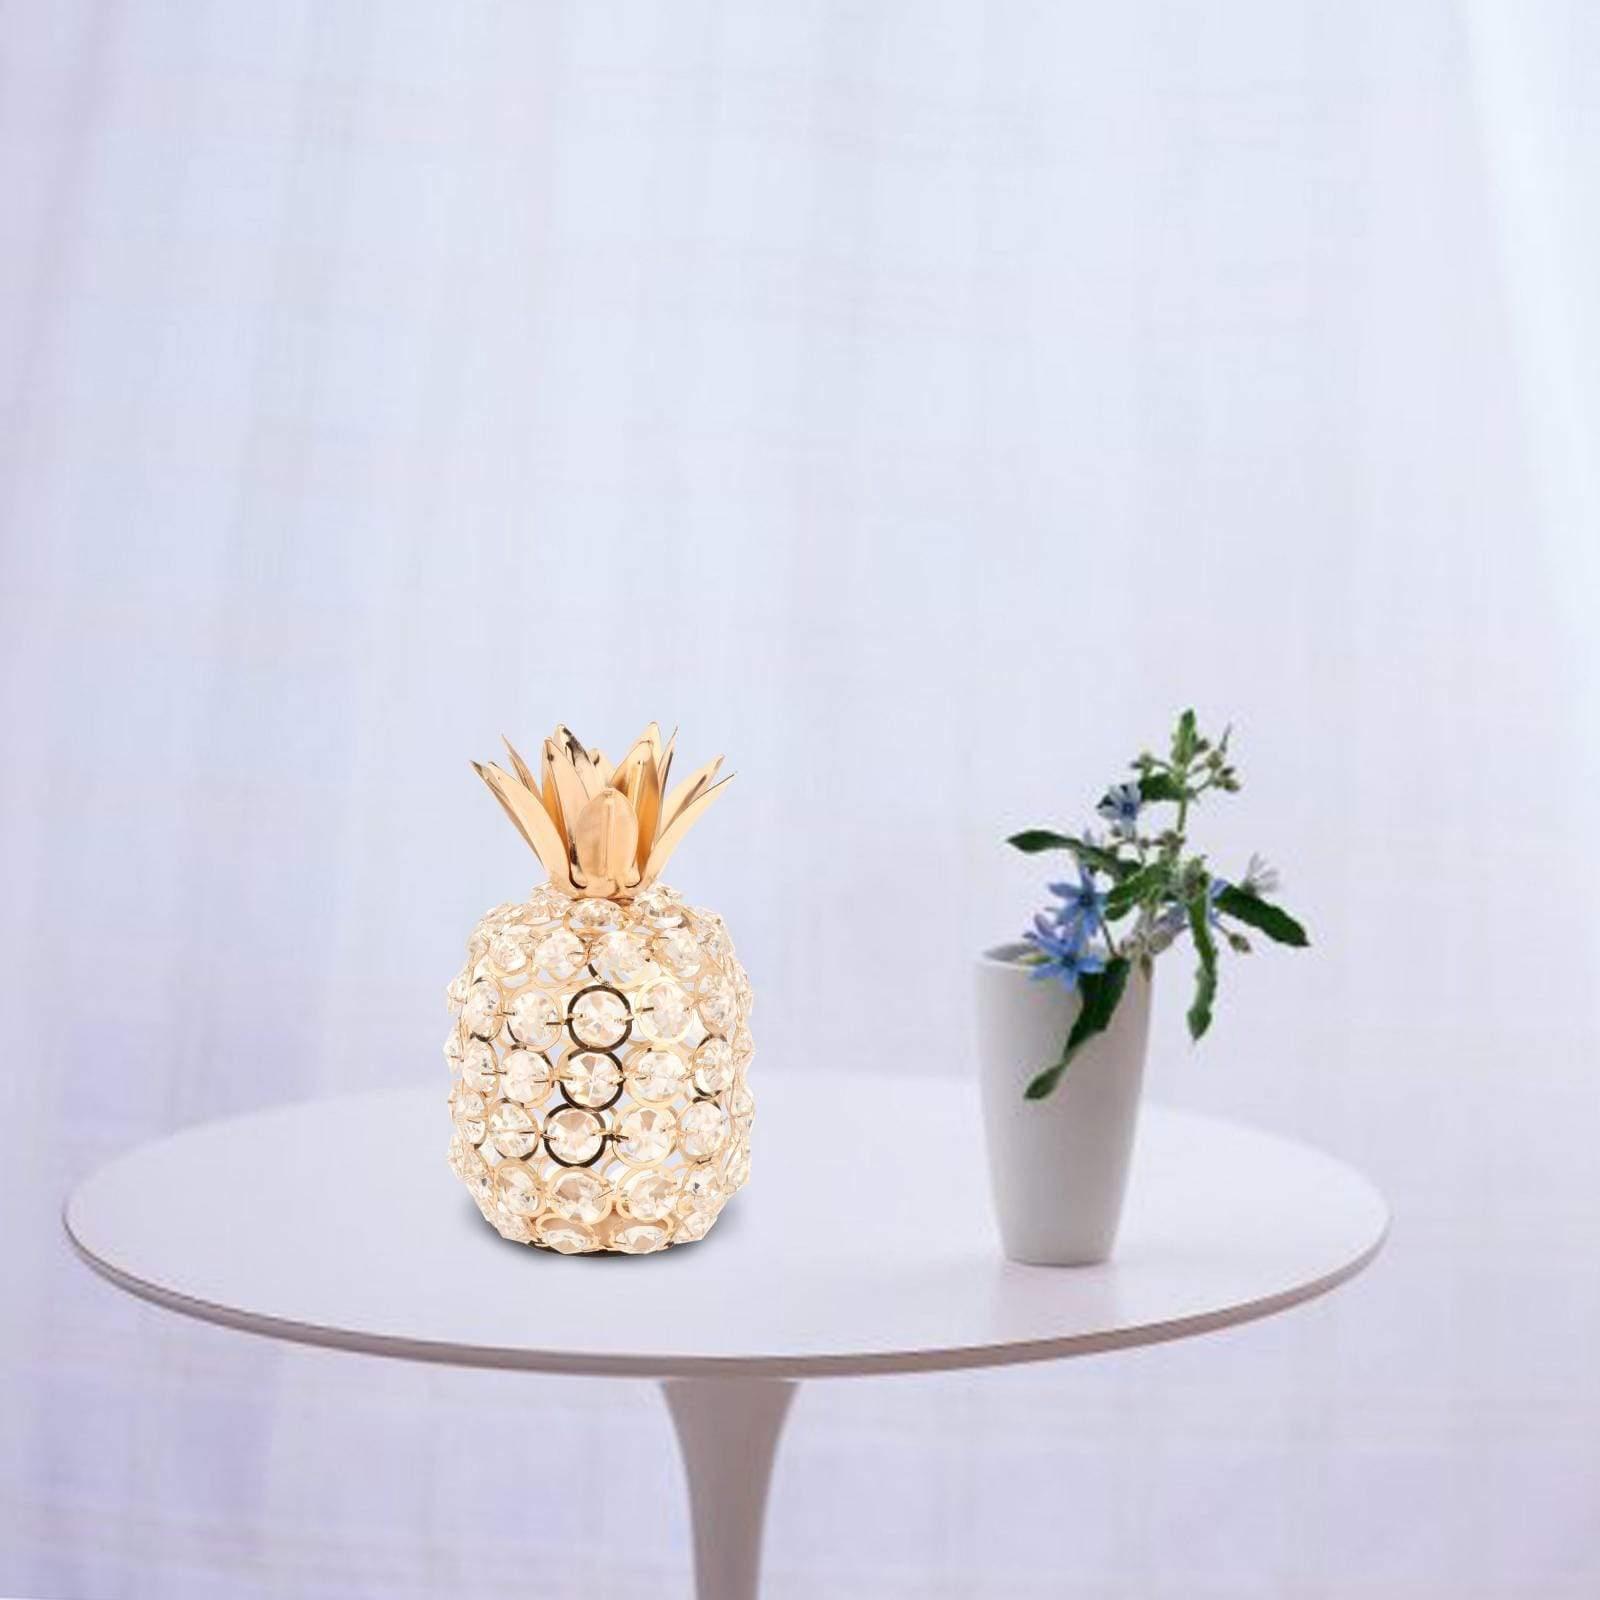 Shop 0 3D Cut Crystal Rhinestone Pineapple Ornament Handmade Tabletop Home Decor Mademoiselle Home Decor